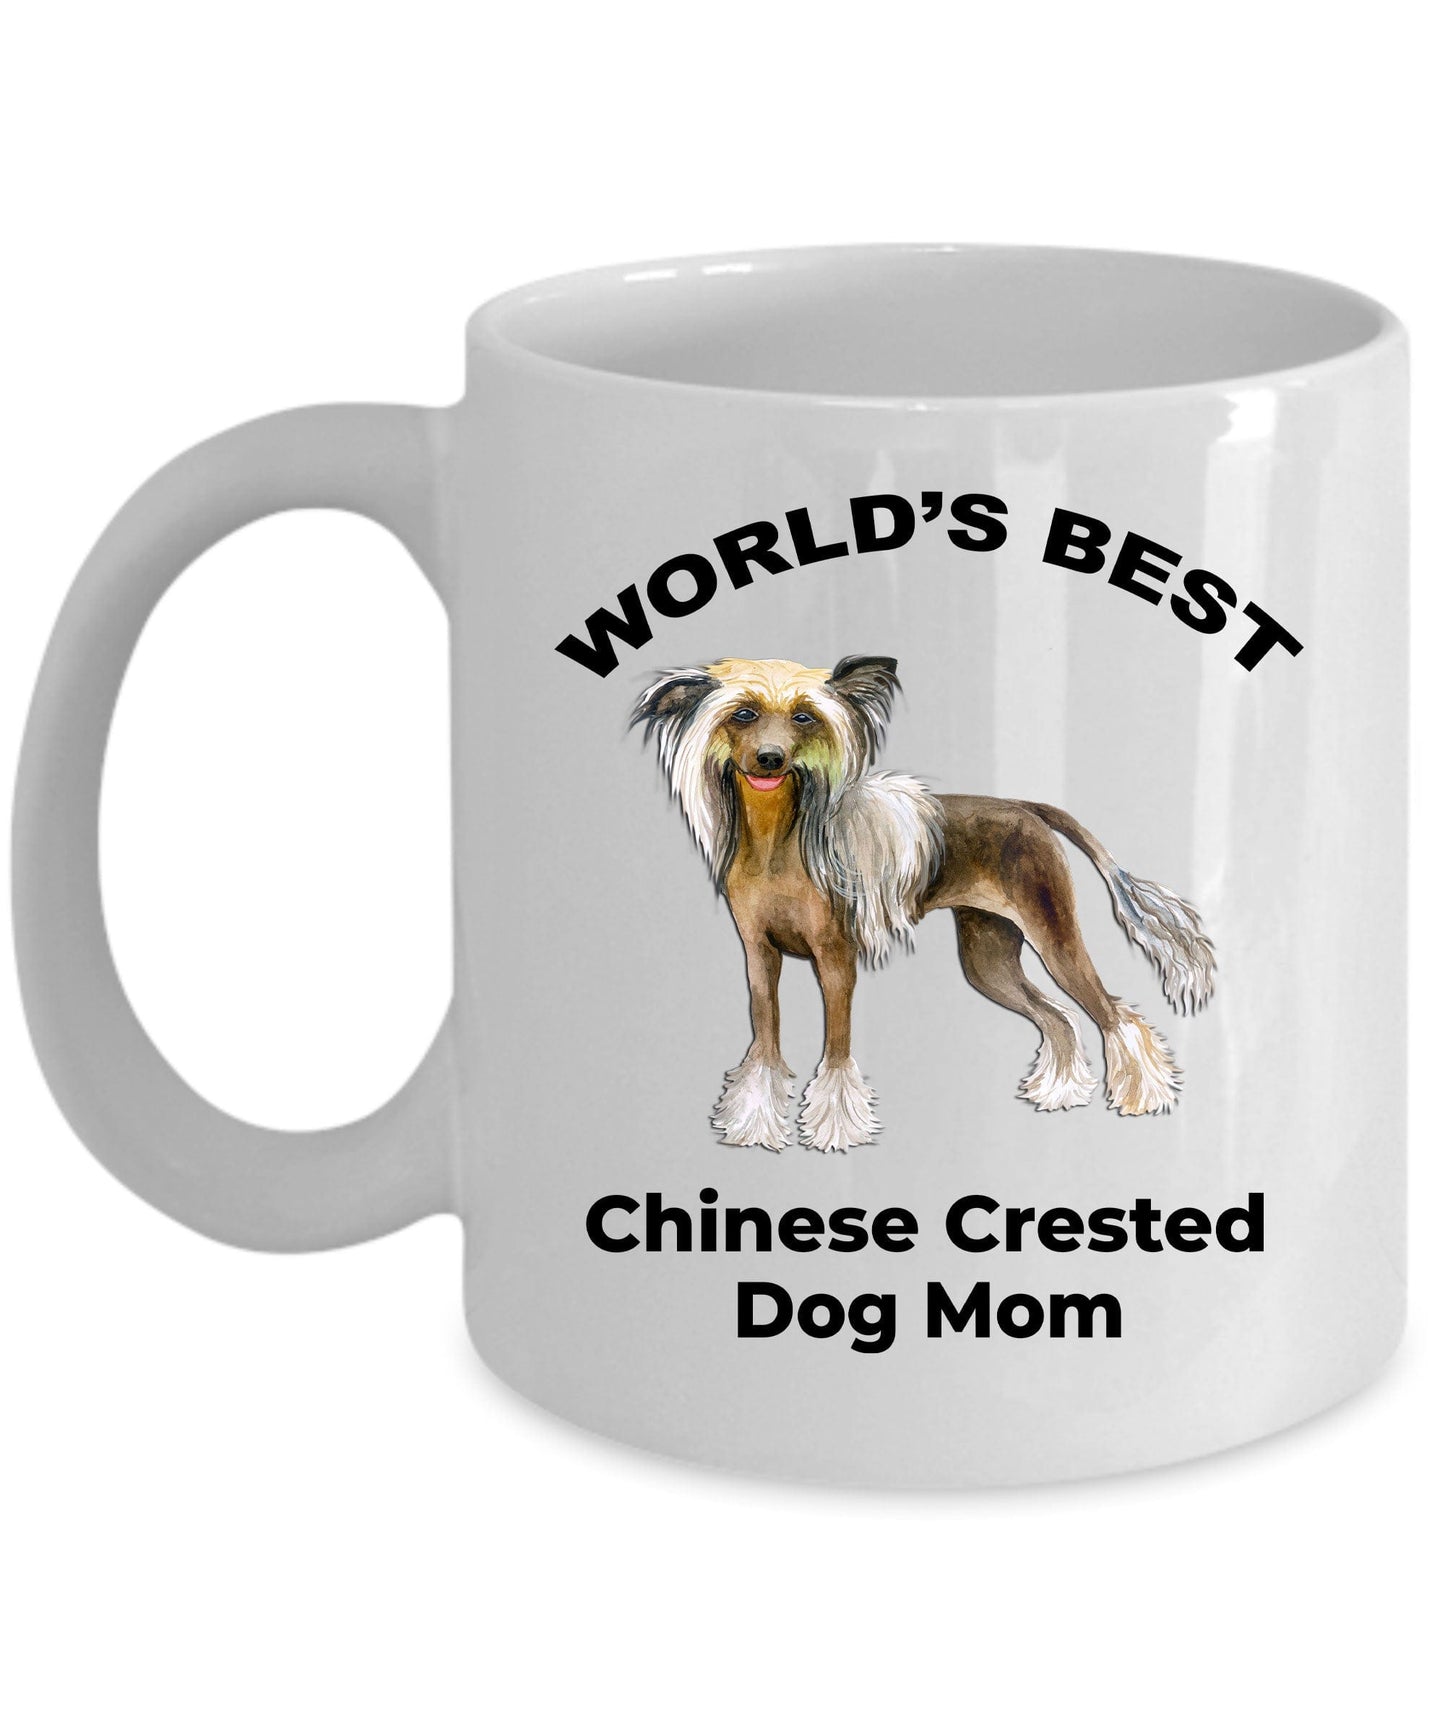 Chinese Crested World's Best Dog Mom Ceramic Coffee Mug